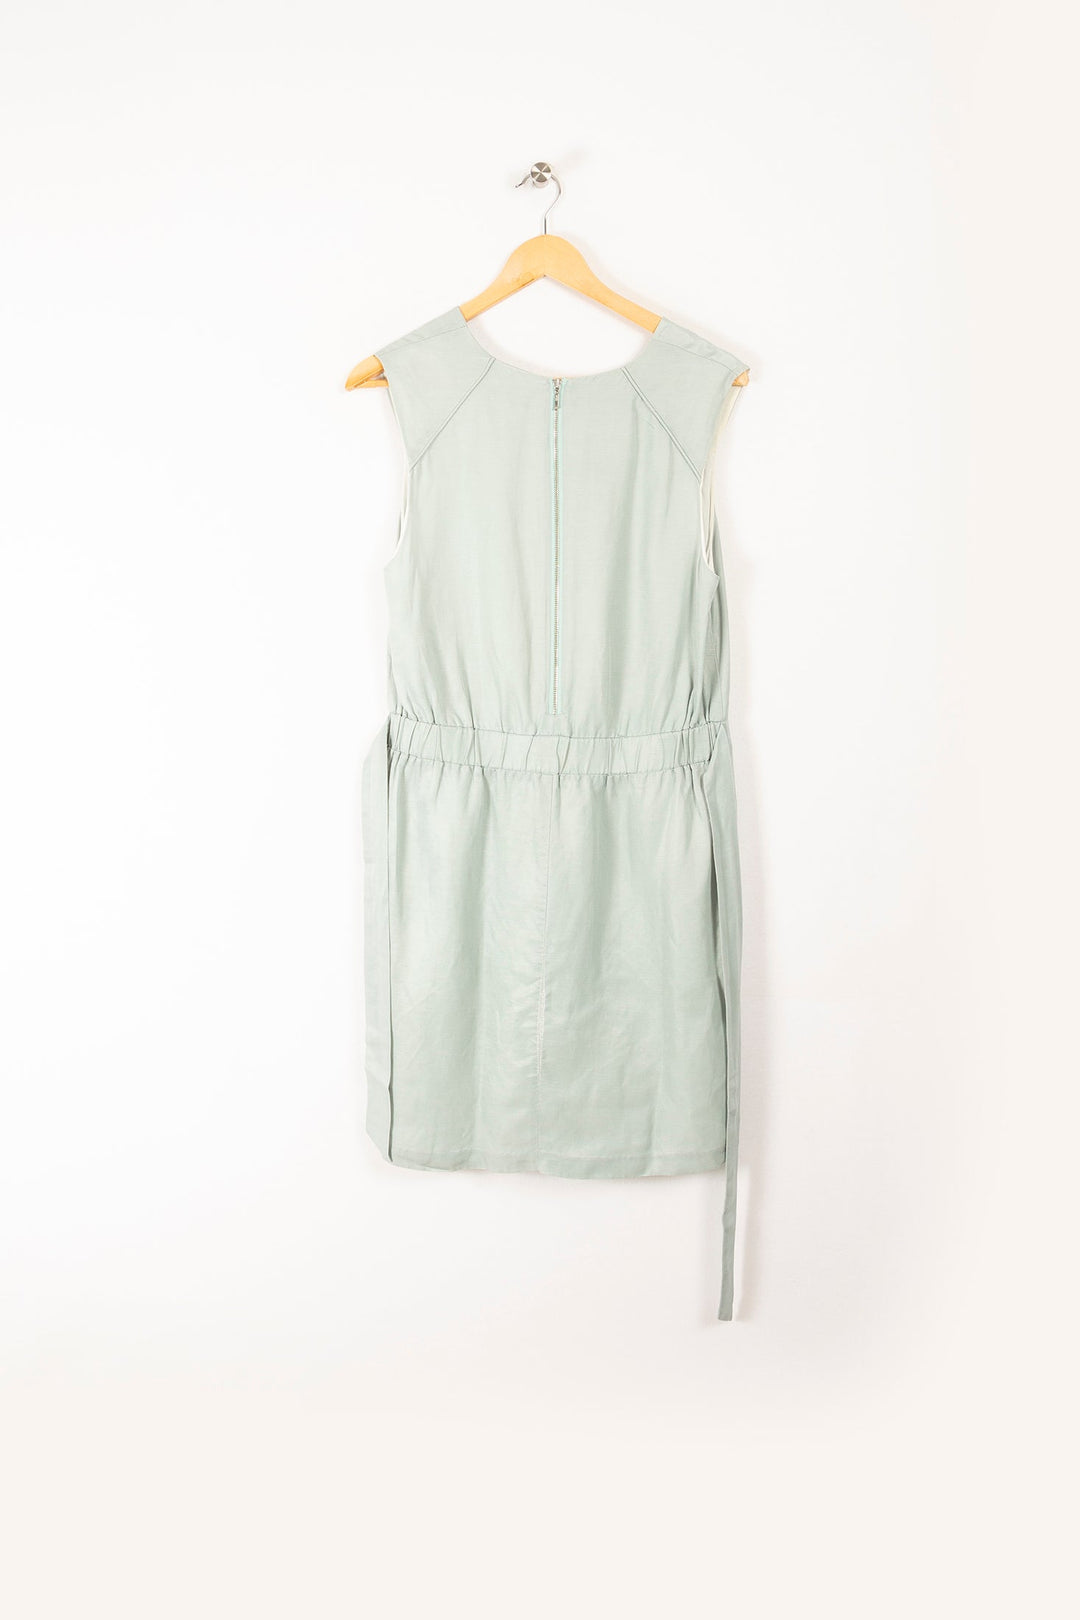 Dress - Size M / 38